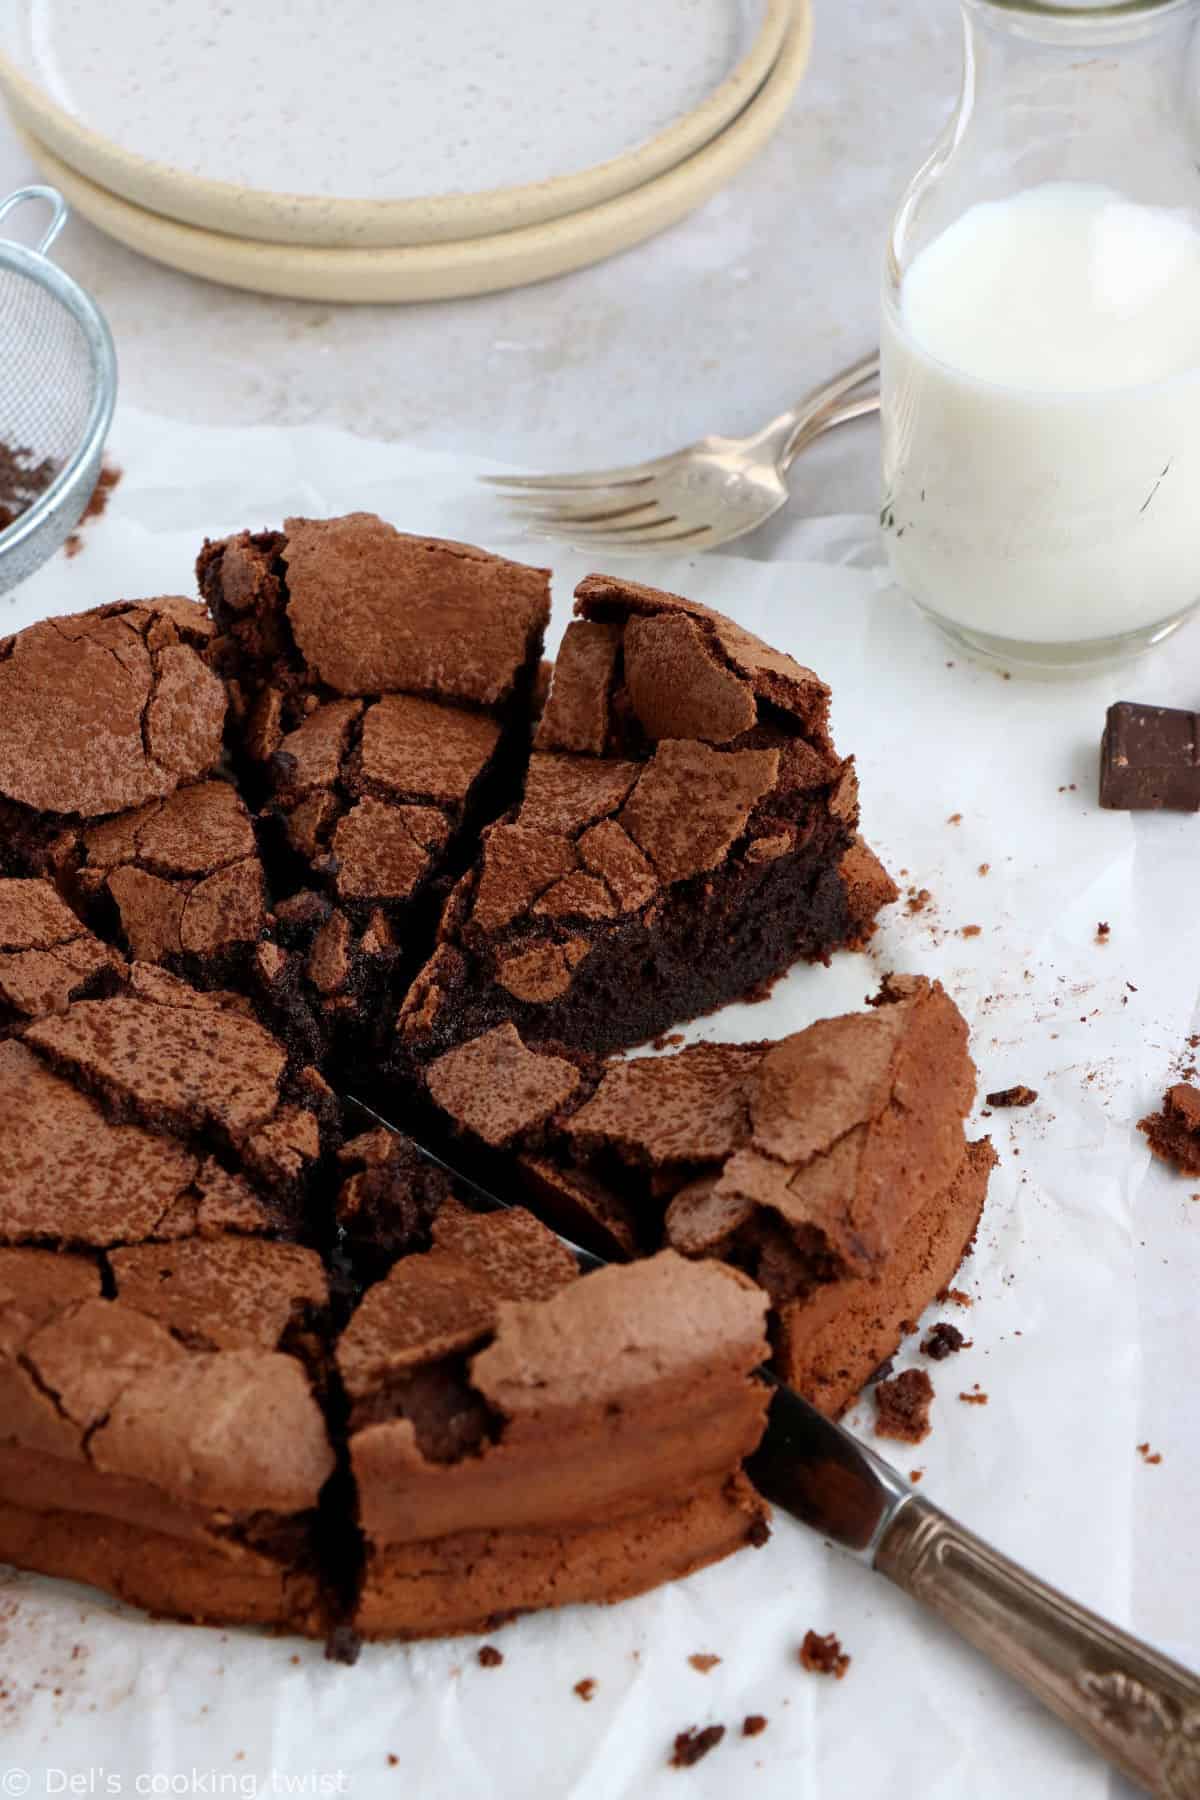 Best Flourless Chocolate Cake - Del's cooking twist